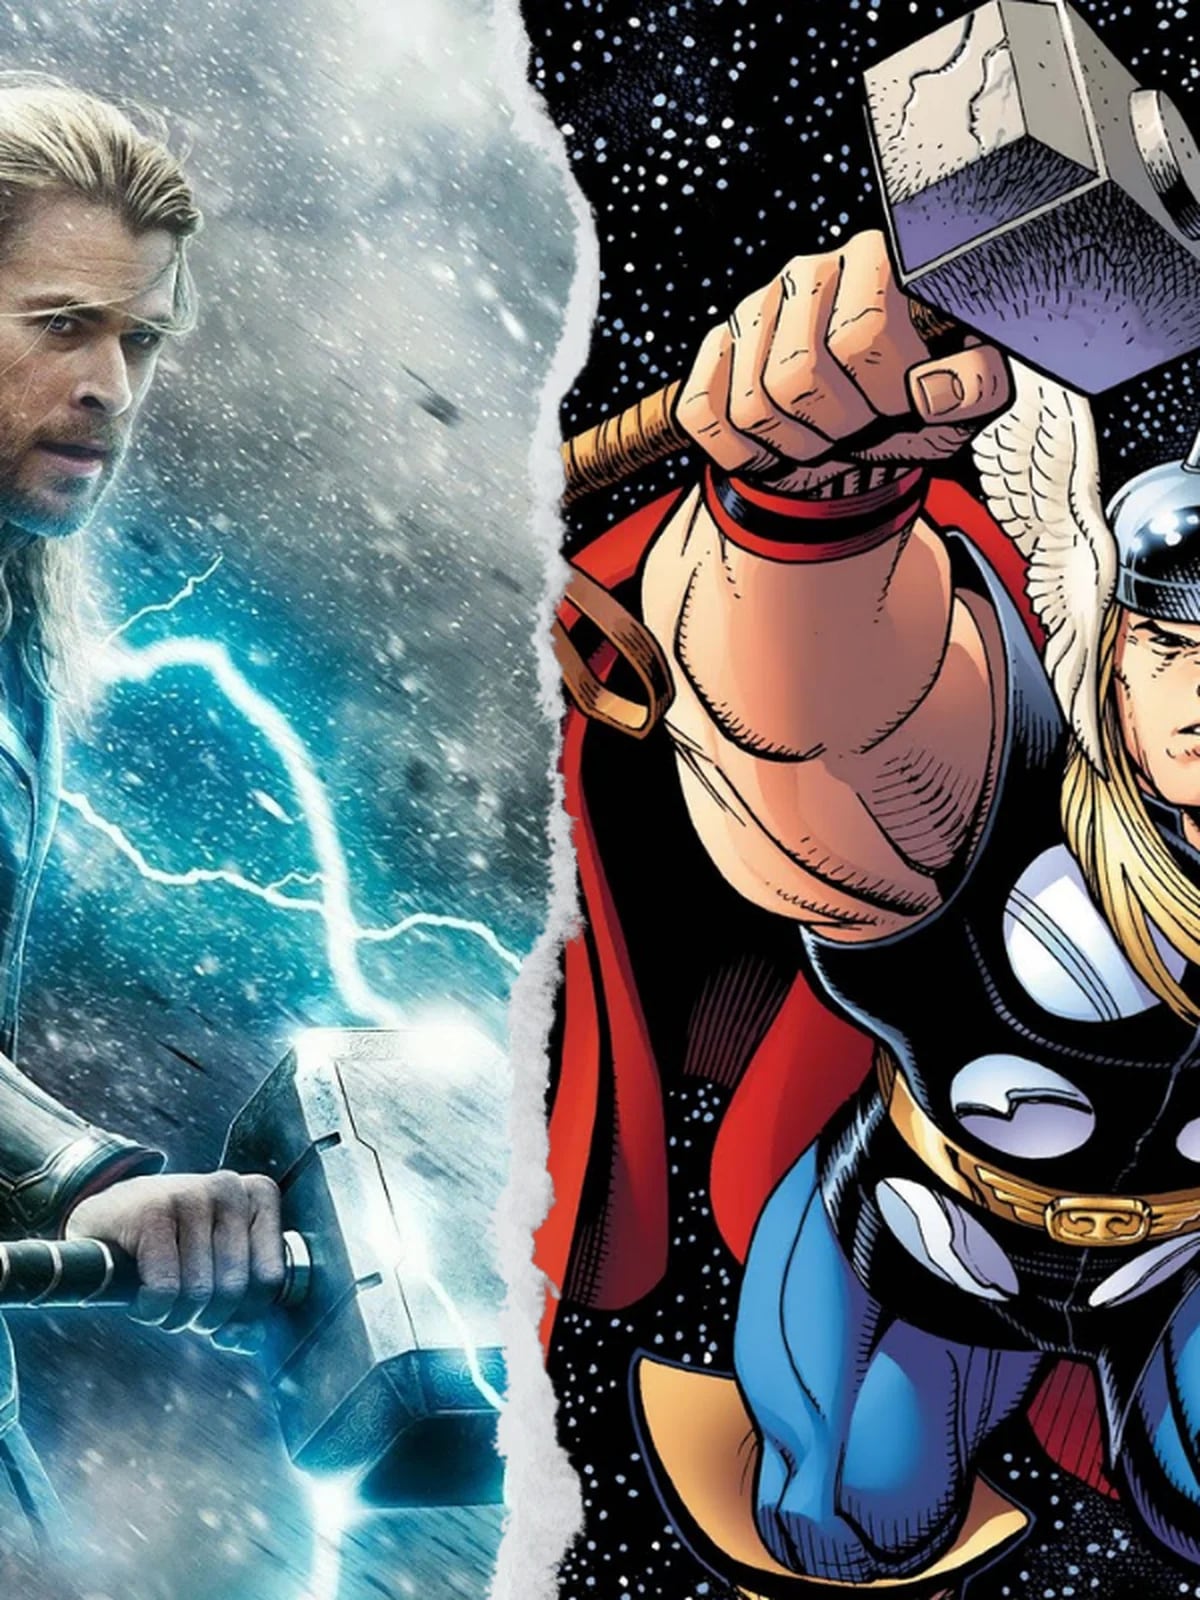 Cómo se llama el martillo de Thor, Mjolnir o Jonathan? - Infobae